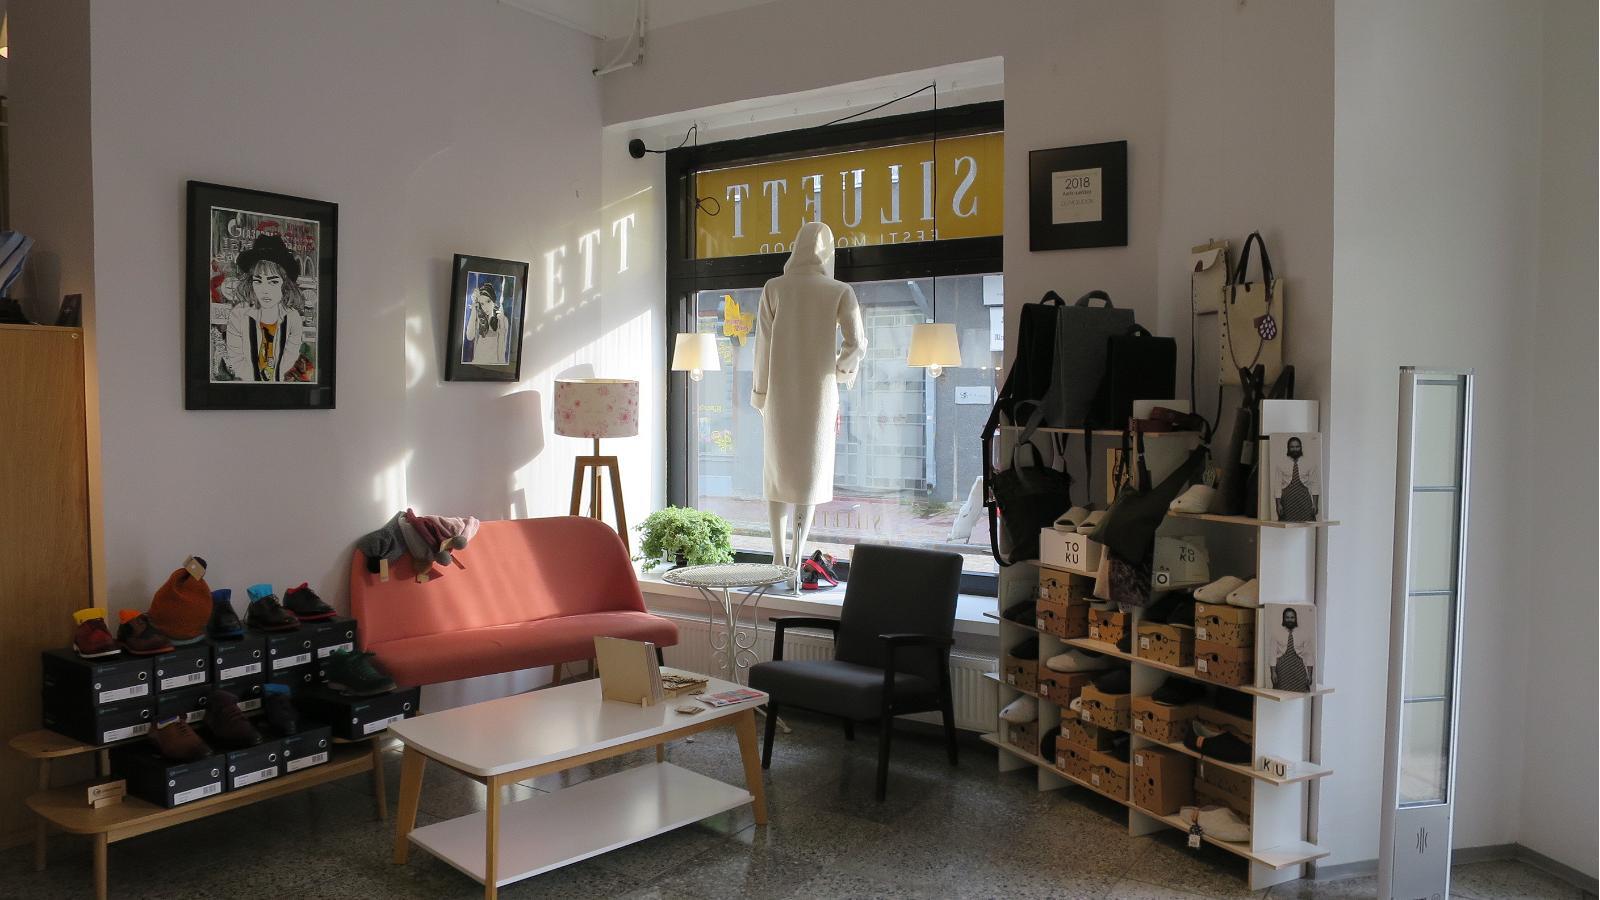 Магазин эстонской моды Siluett